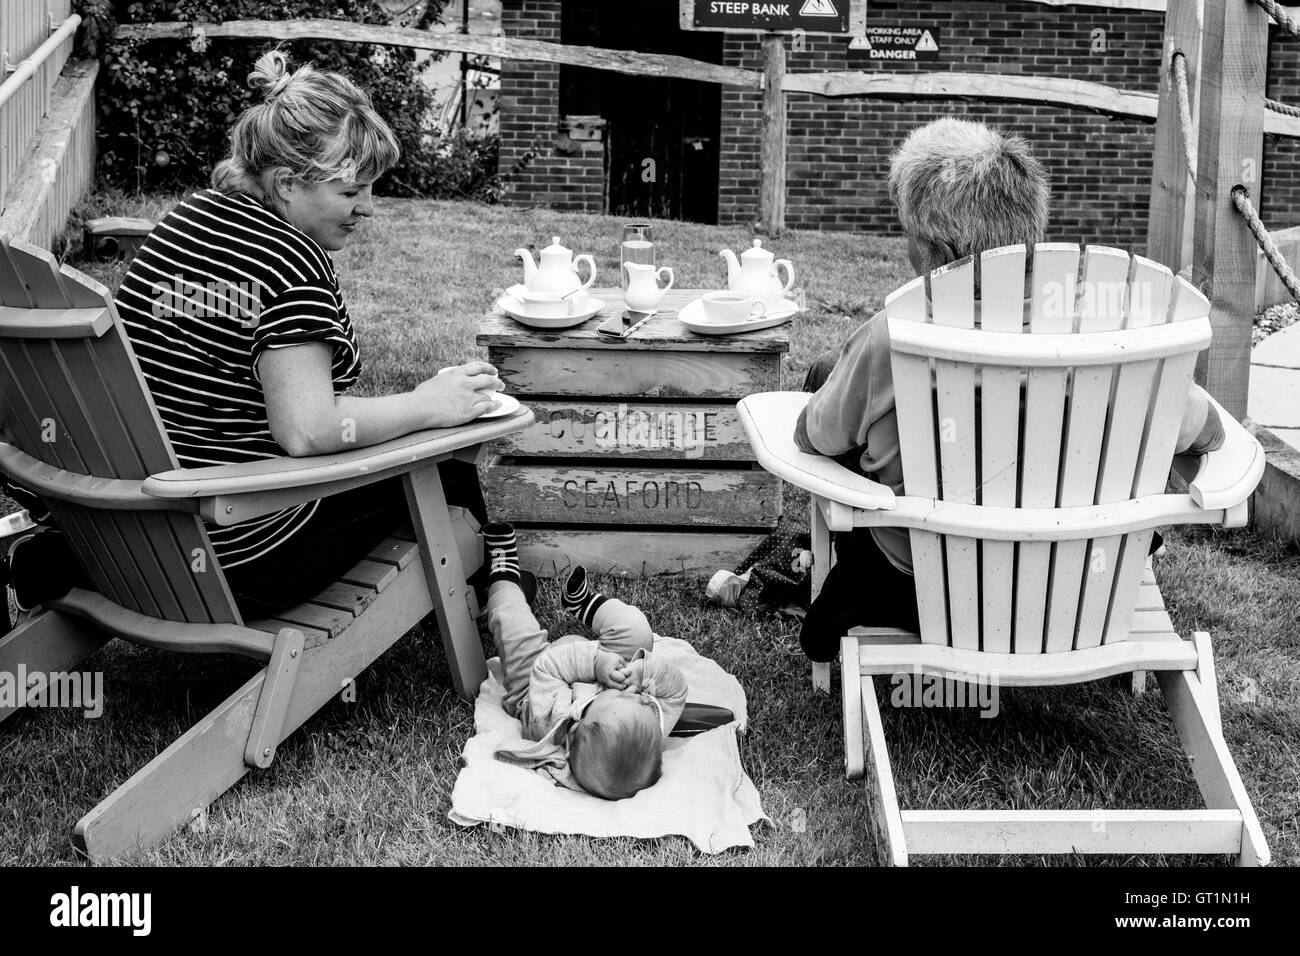 A Family Enjoying A Pot Of Tea In A Pub Garden, Sussex, UK Stock Photo